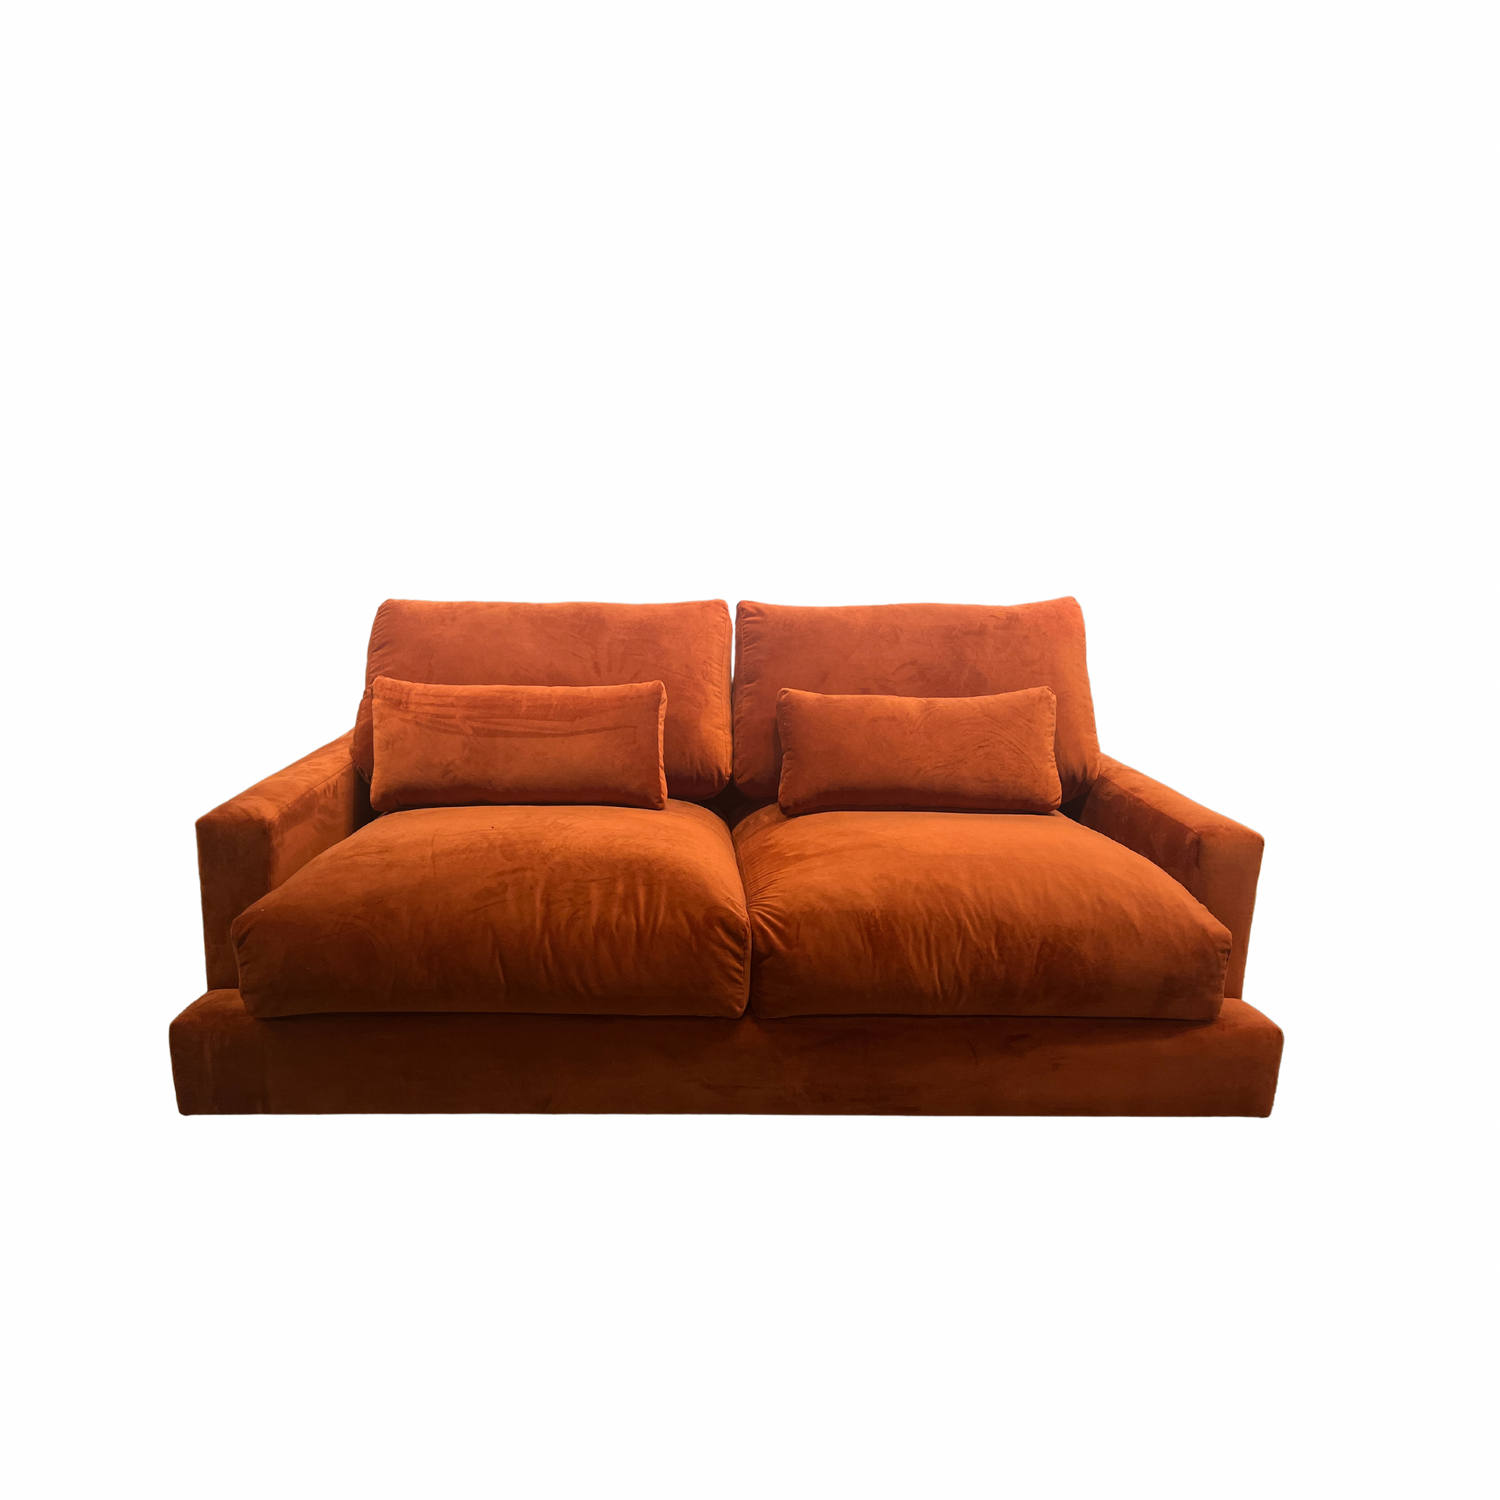 Helsinki sofa